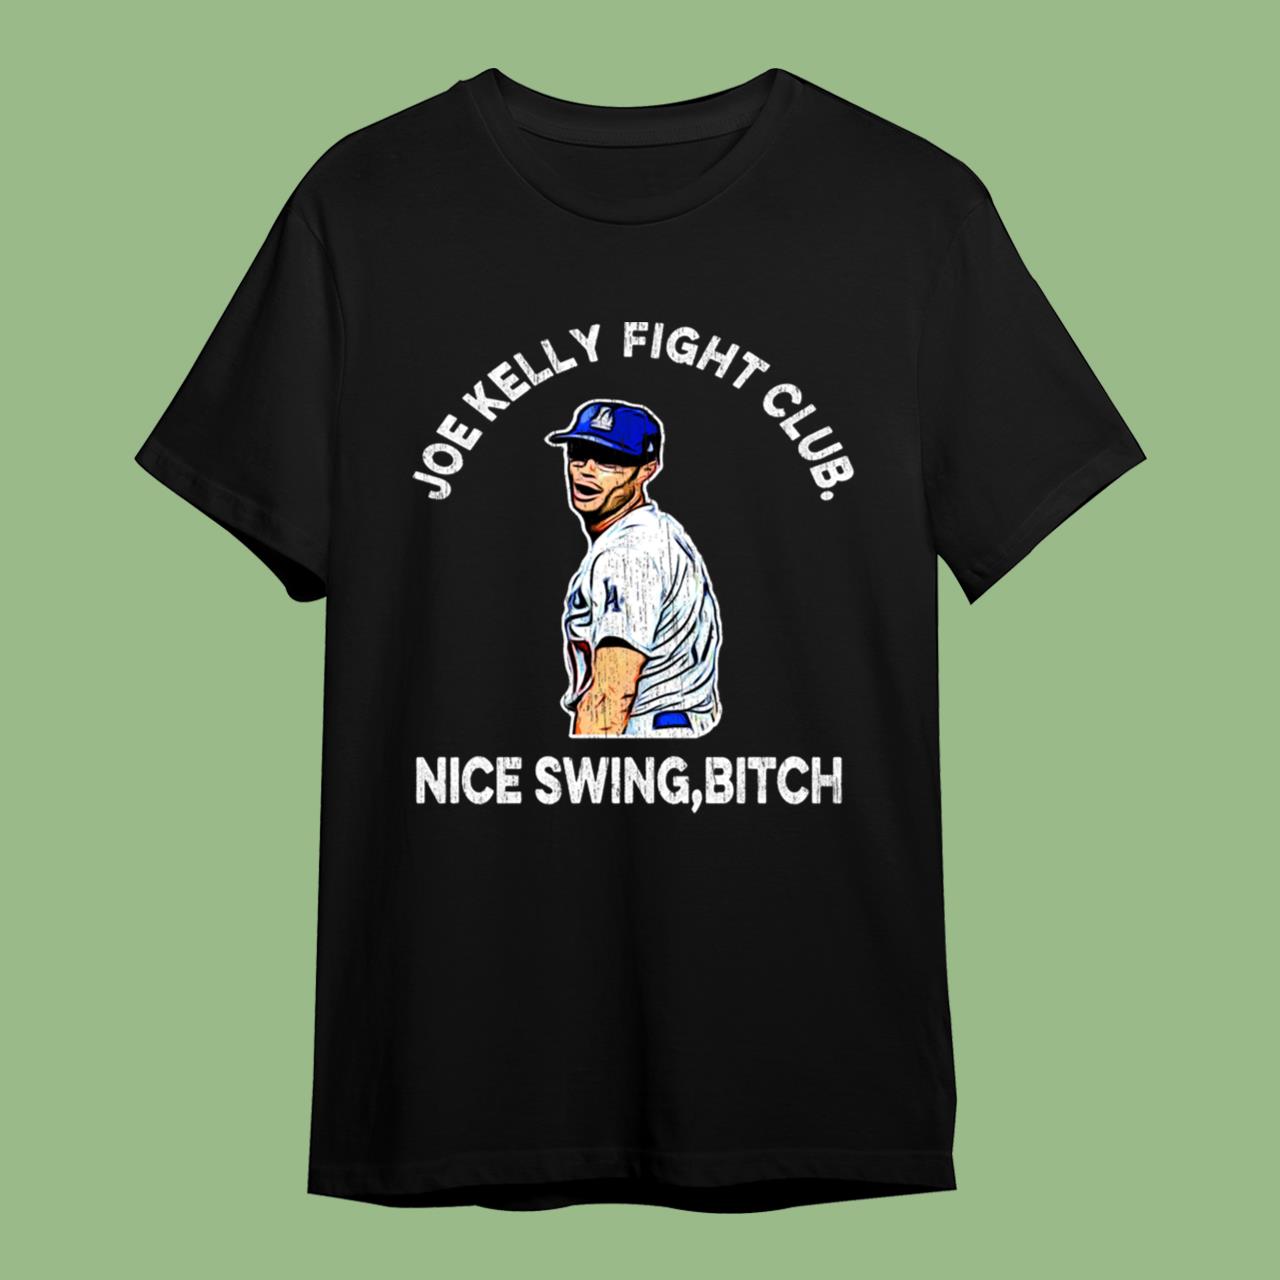 Joe Kelly Fight Club - Nice Swing Bitch T-Shirt